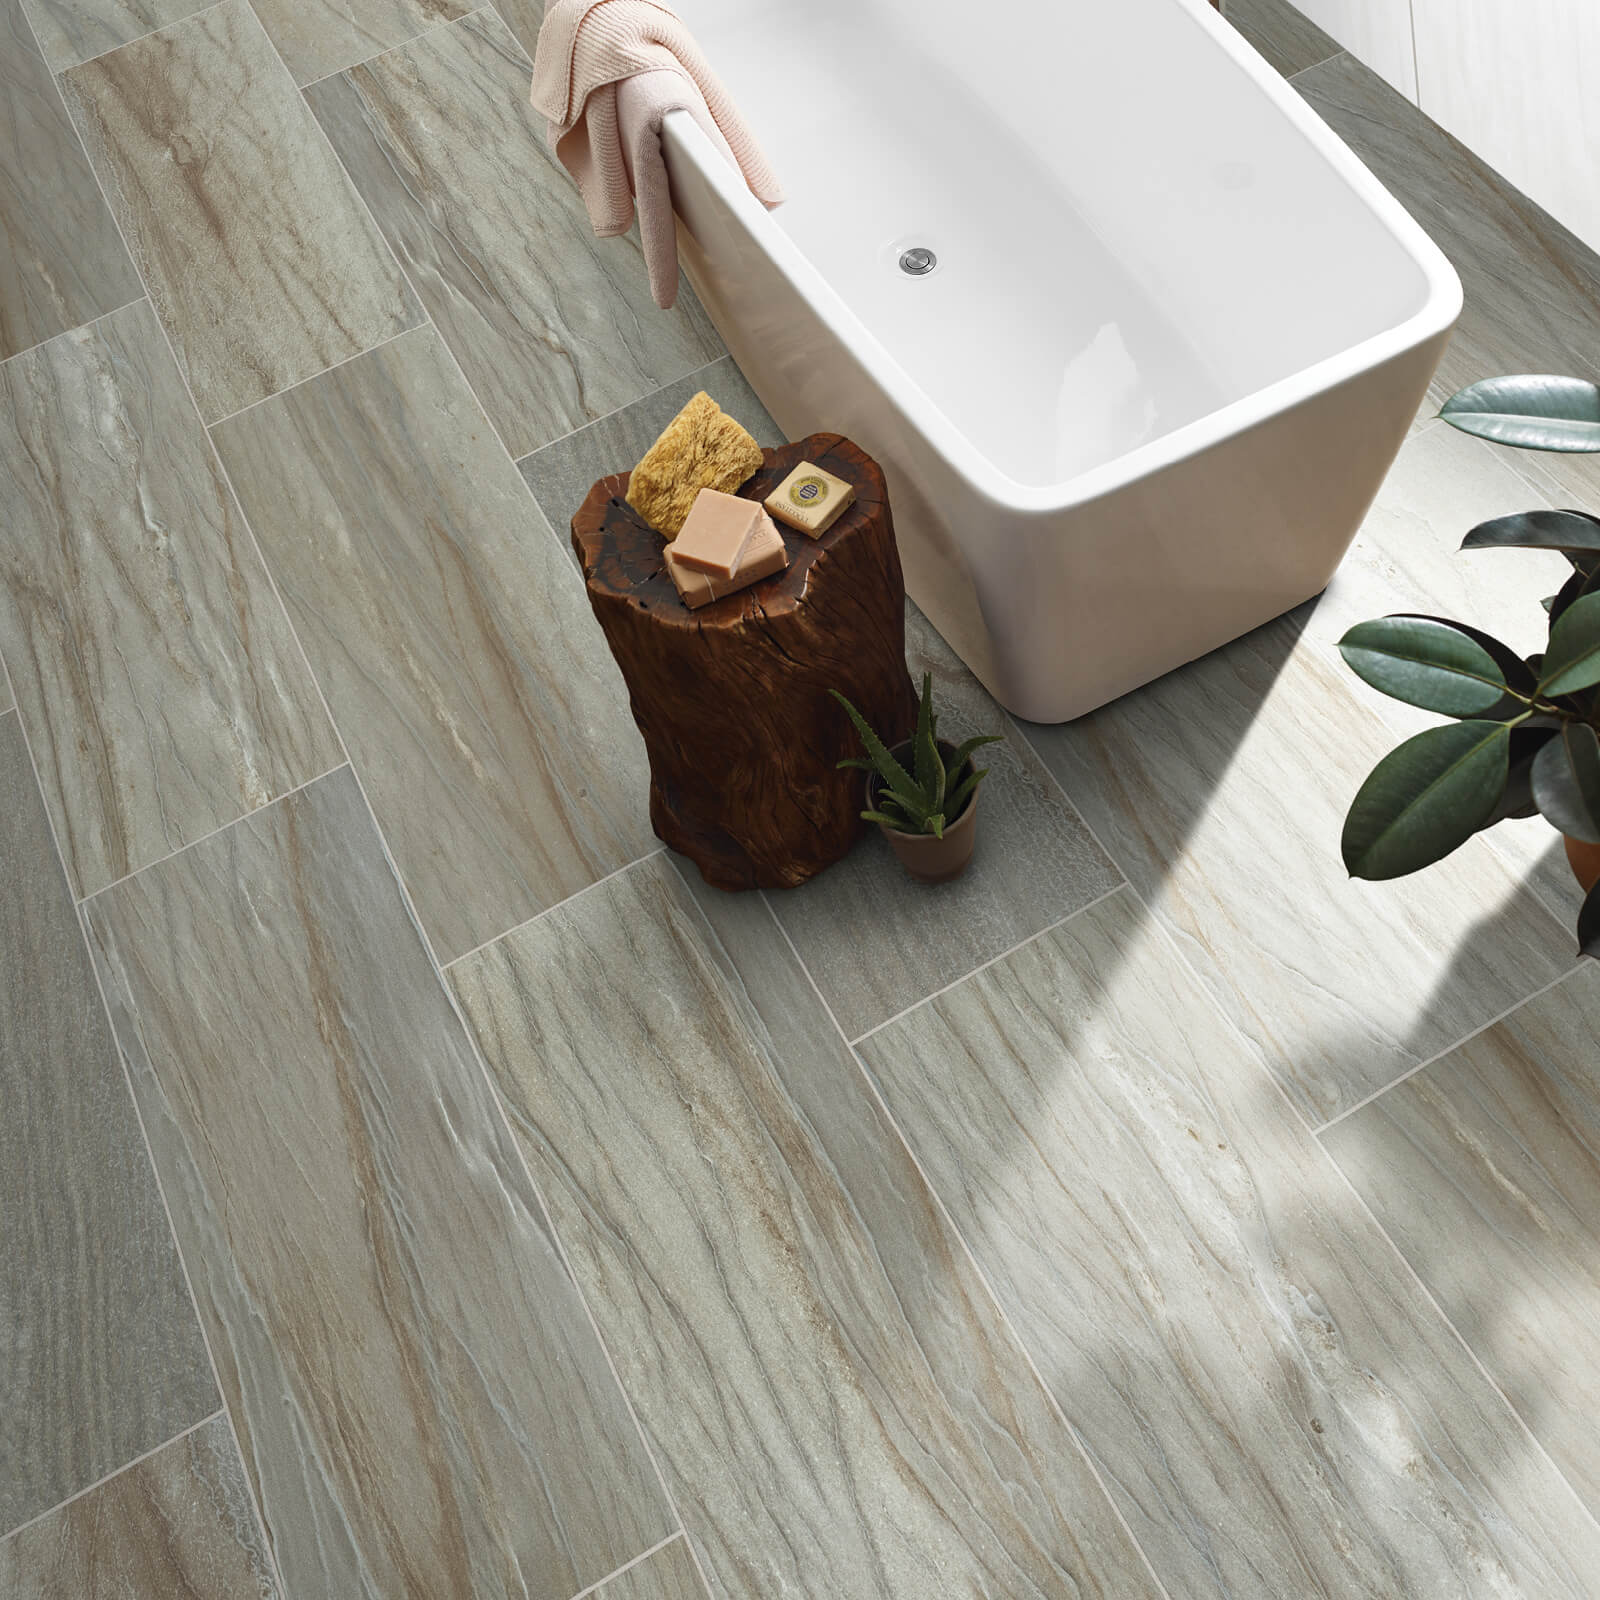 Tile flooring in bathroom | Carpet And Floors For Less